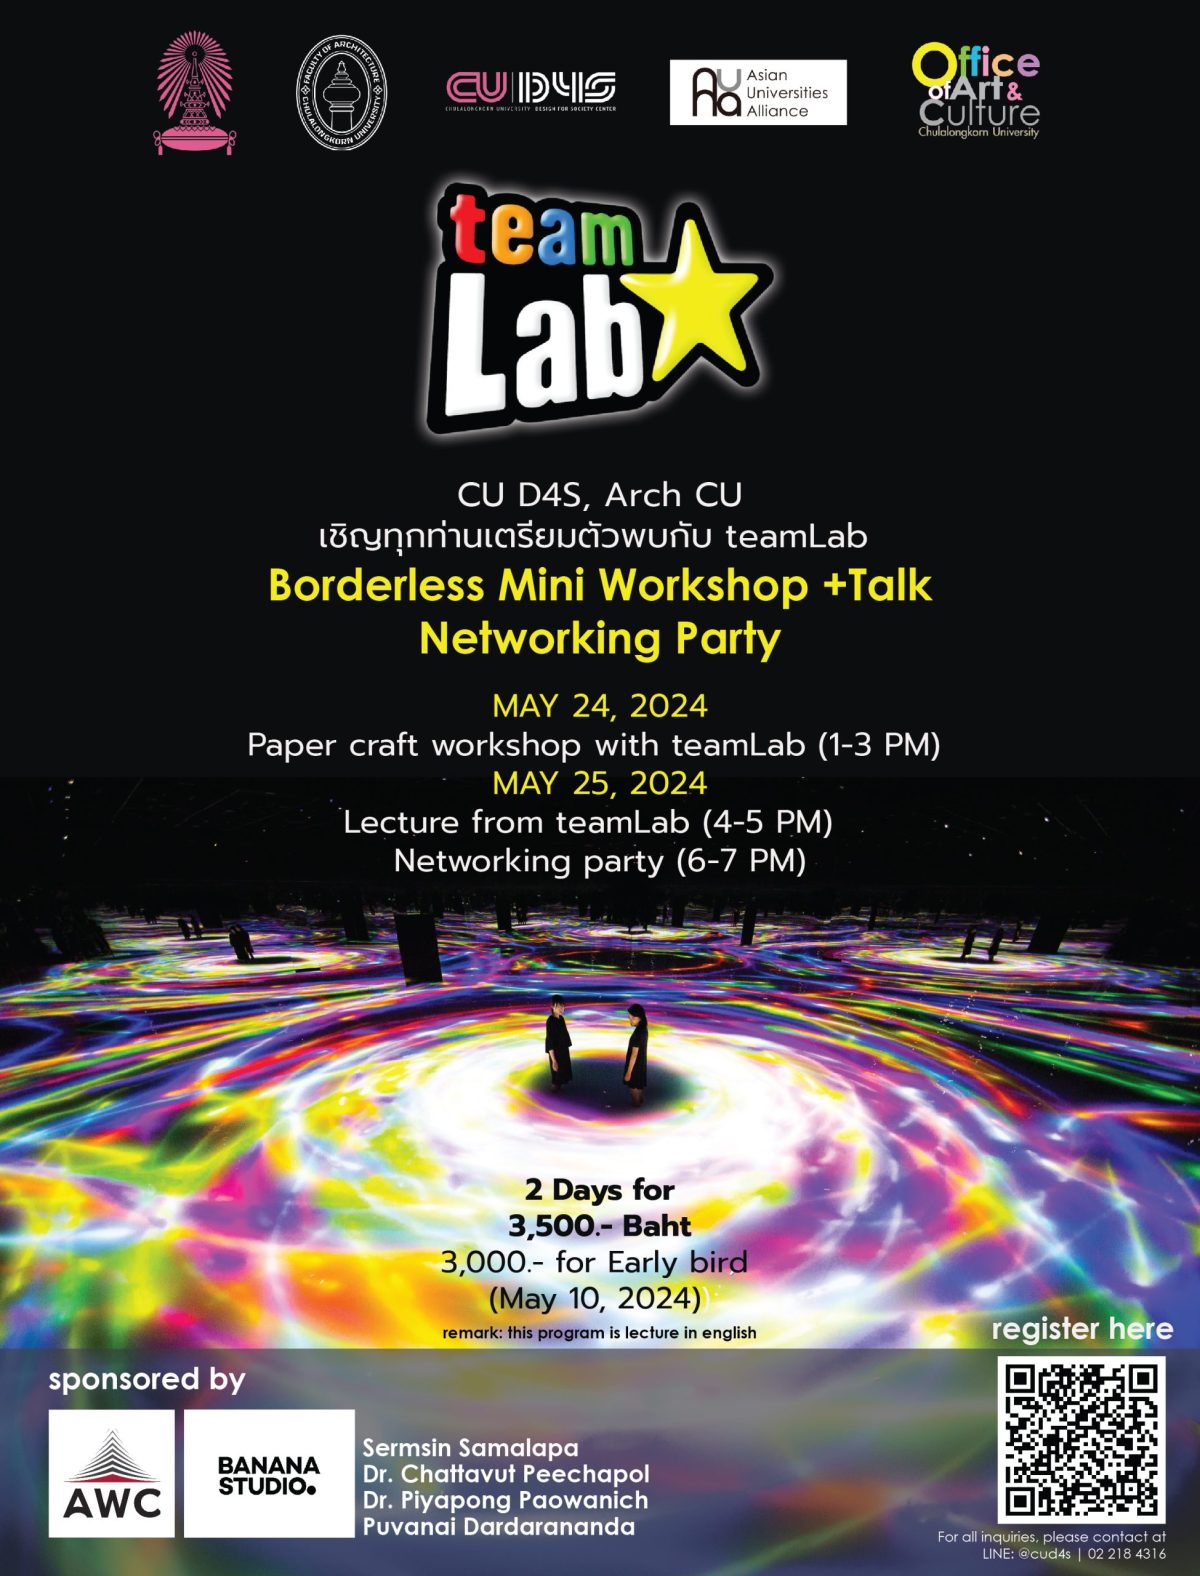 CU D4S และคณะสถาปัตยกรรมศาสตร์ จุฬาลงกรณ์มหาวิทยาลัย จัดกิจกรรมเวิร์กช็อปร่วมกับทีมแล็ป (teamLab) ภายใต้ธีม ‘Borderless Connection Exchanges in a Mini Papercraft Workshop with TeamLab